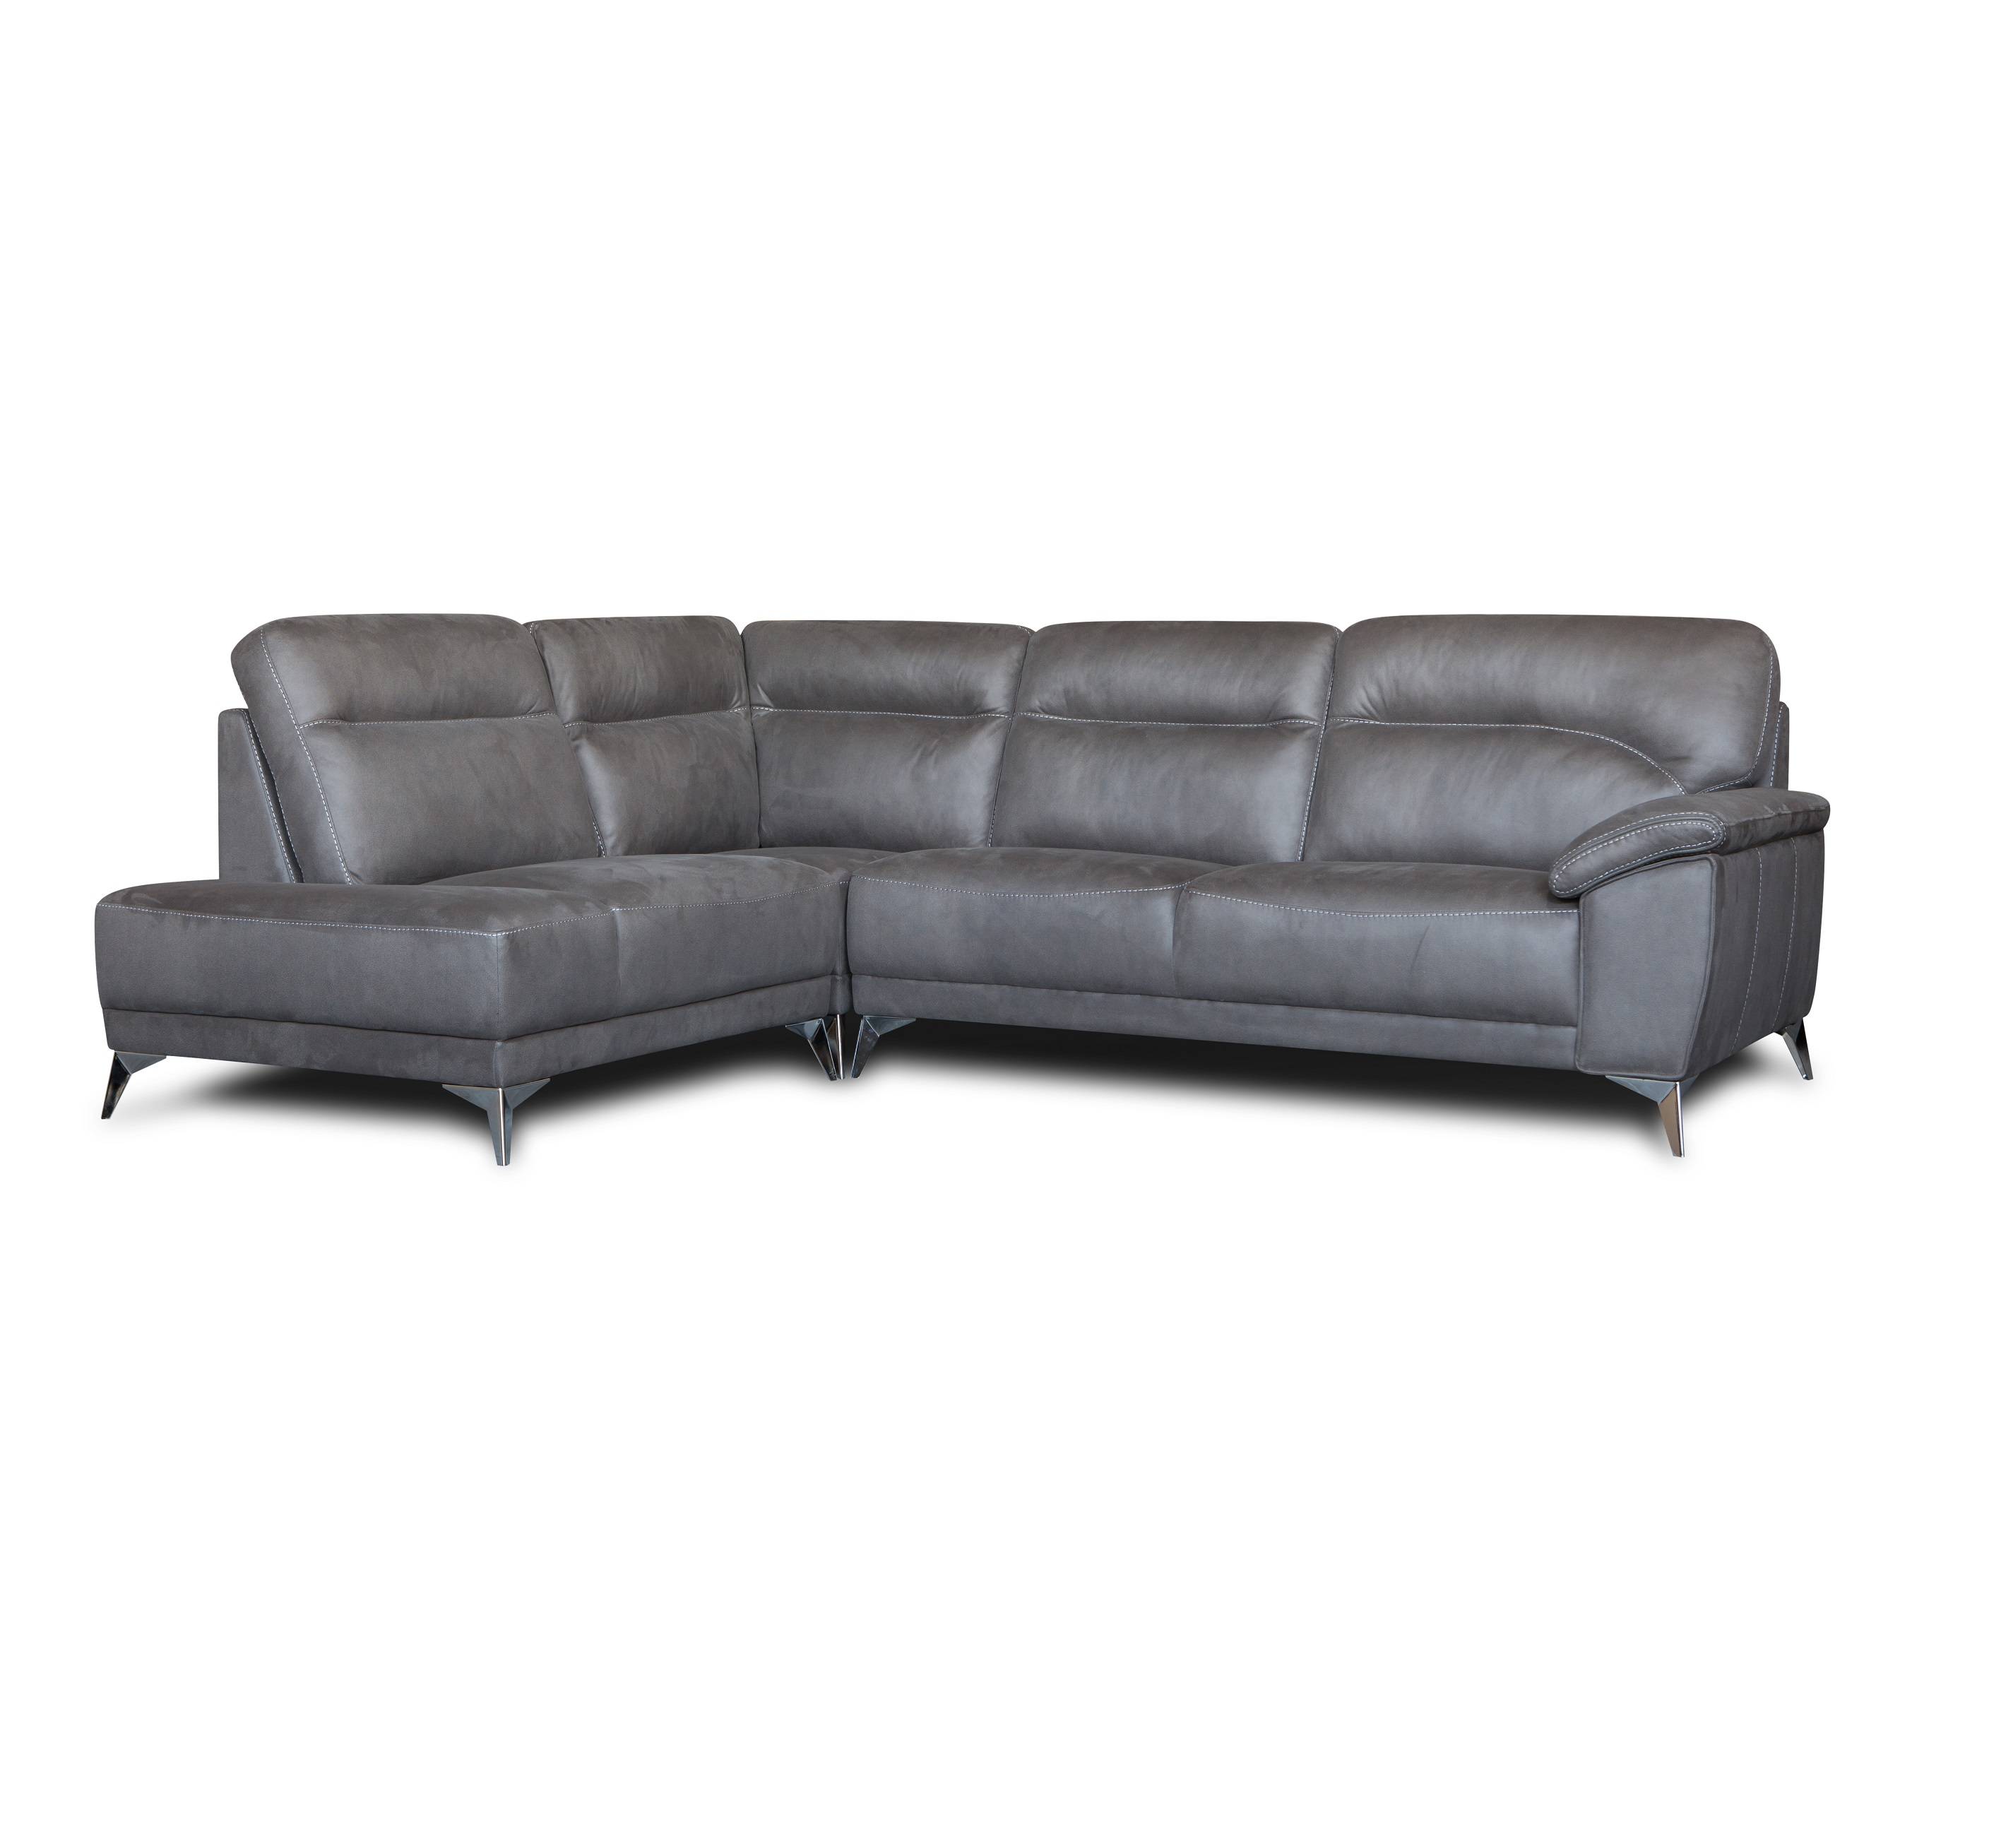 2019 latest home furniture leather l shape corner sofa